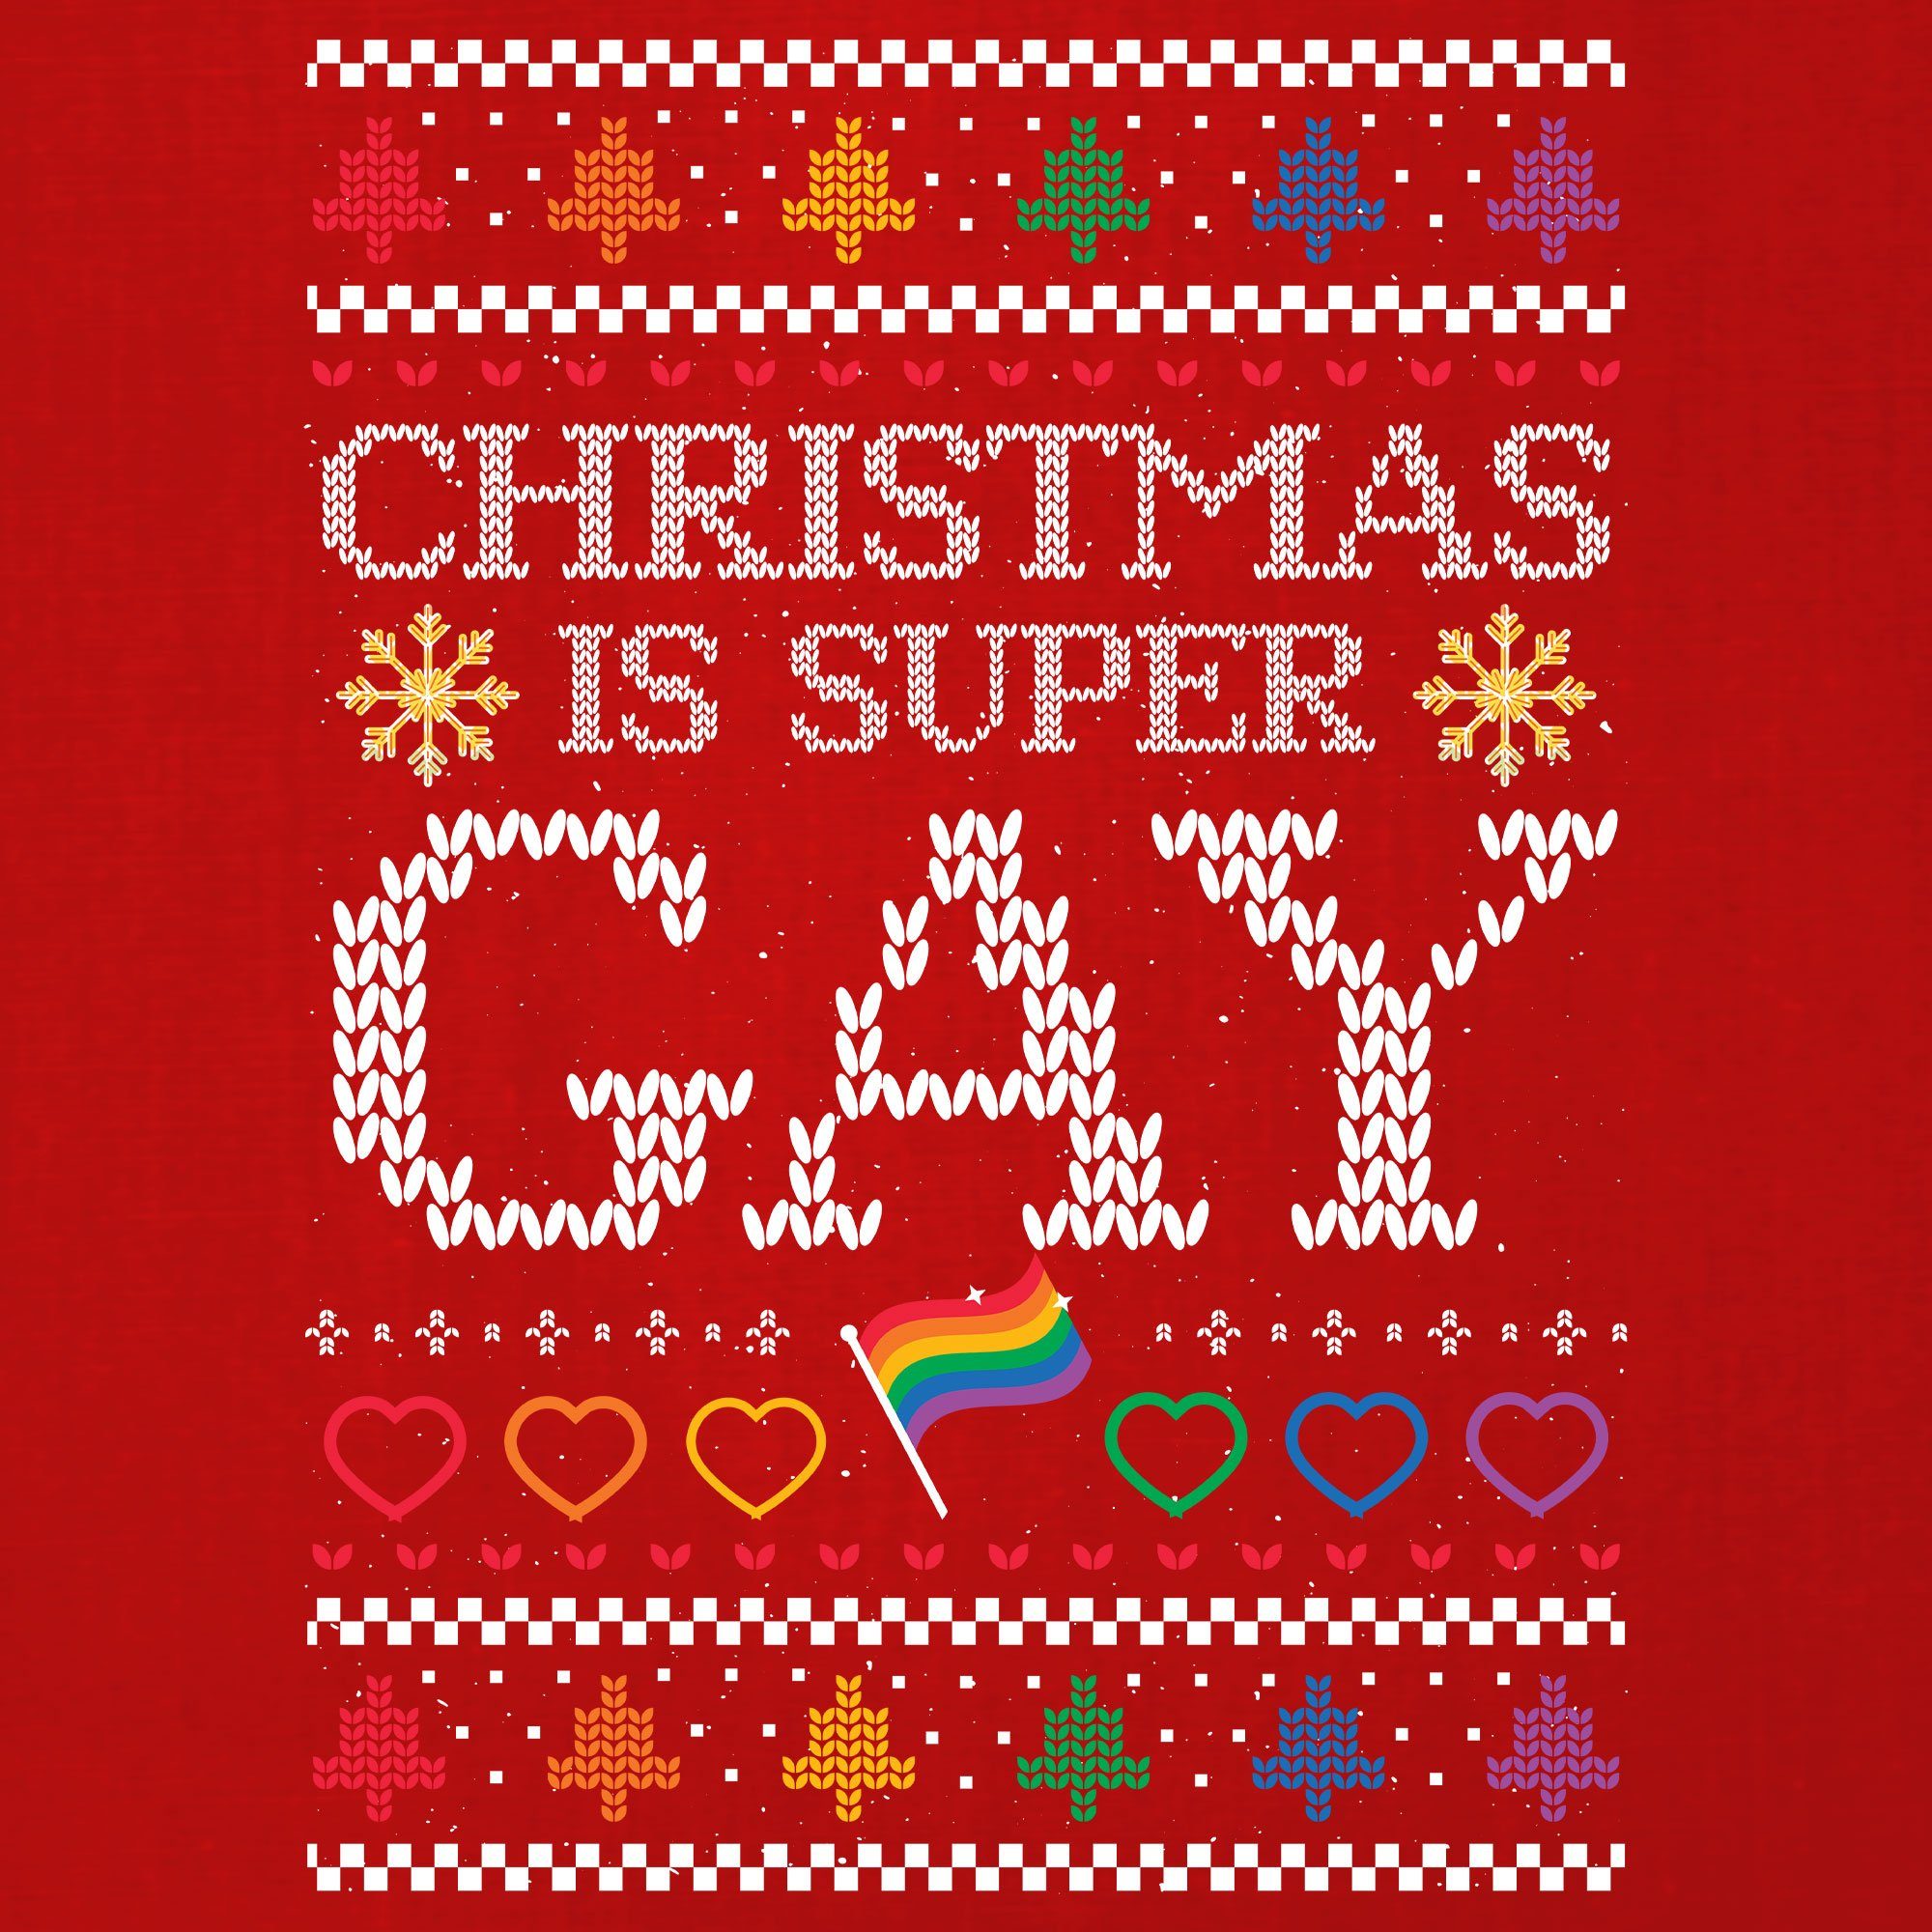 (1-tlg) X-mas Gay Quattro Weihnachten T-Shi Kurzarmshirt Rot Christmas Formatee LGBT - Herren Weihnachtsgeschenk